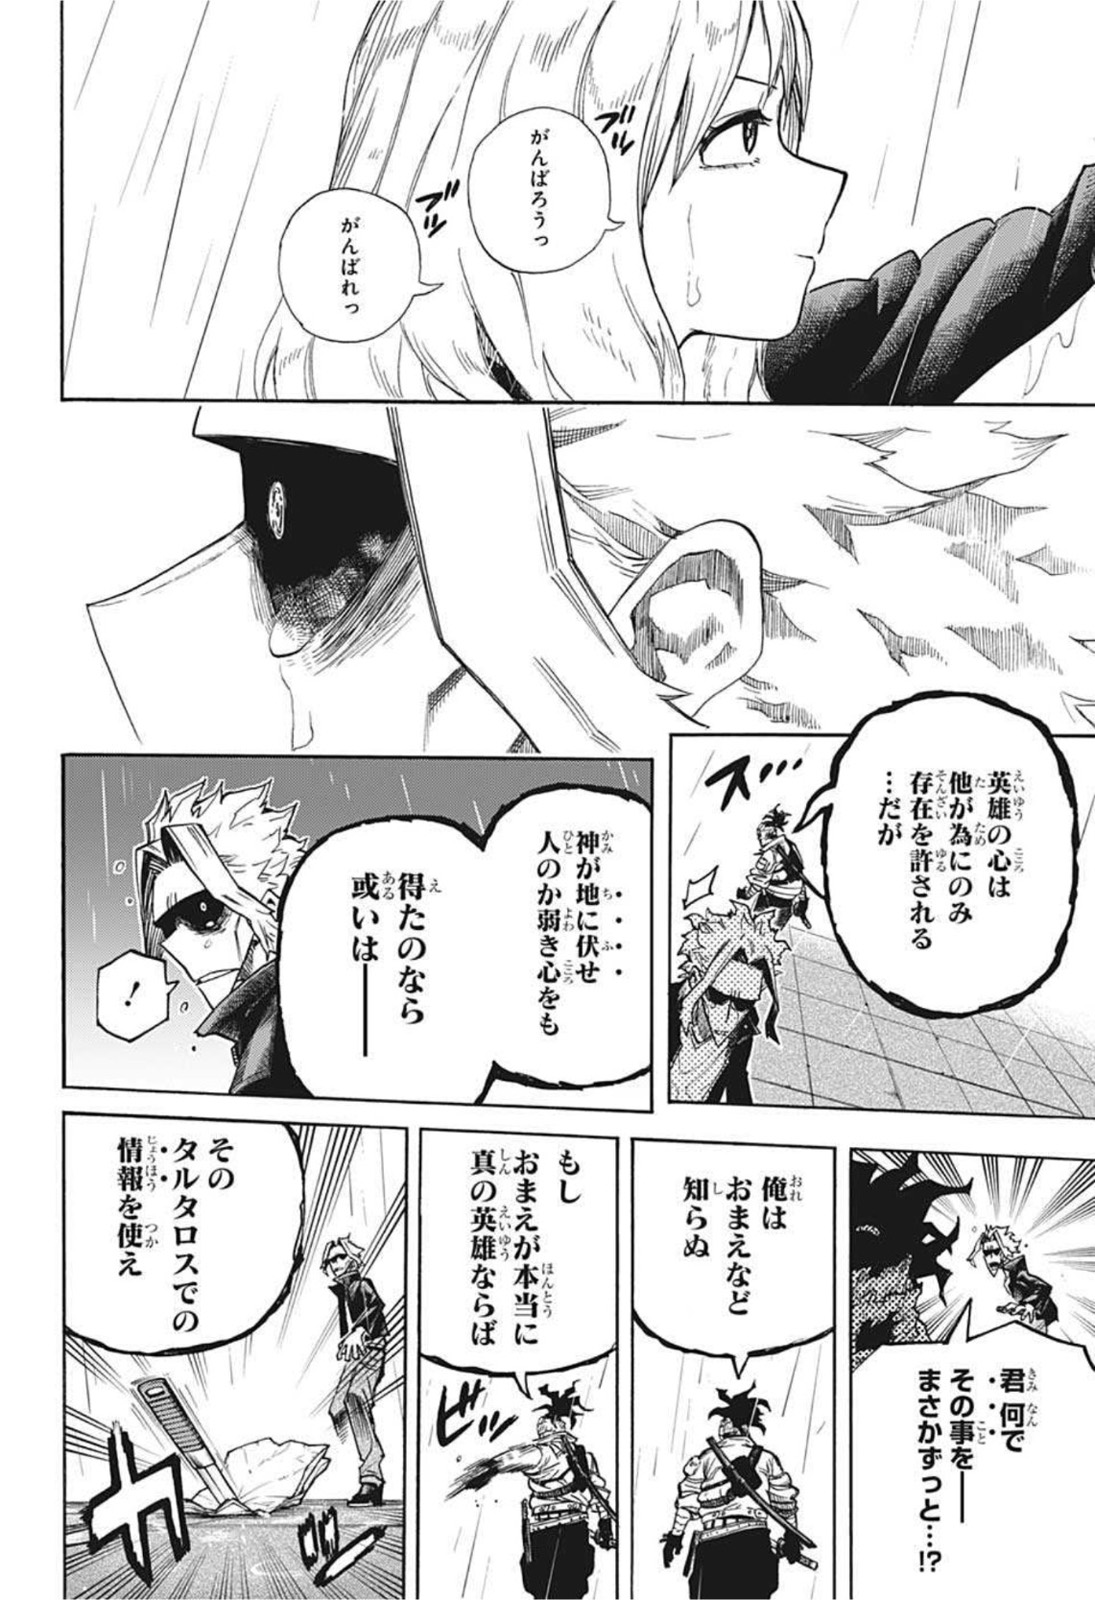 Boku no Hero Academia - Chapter 326 - Page 14